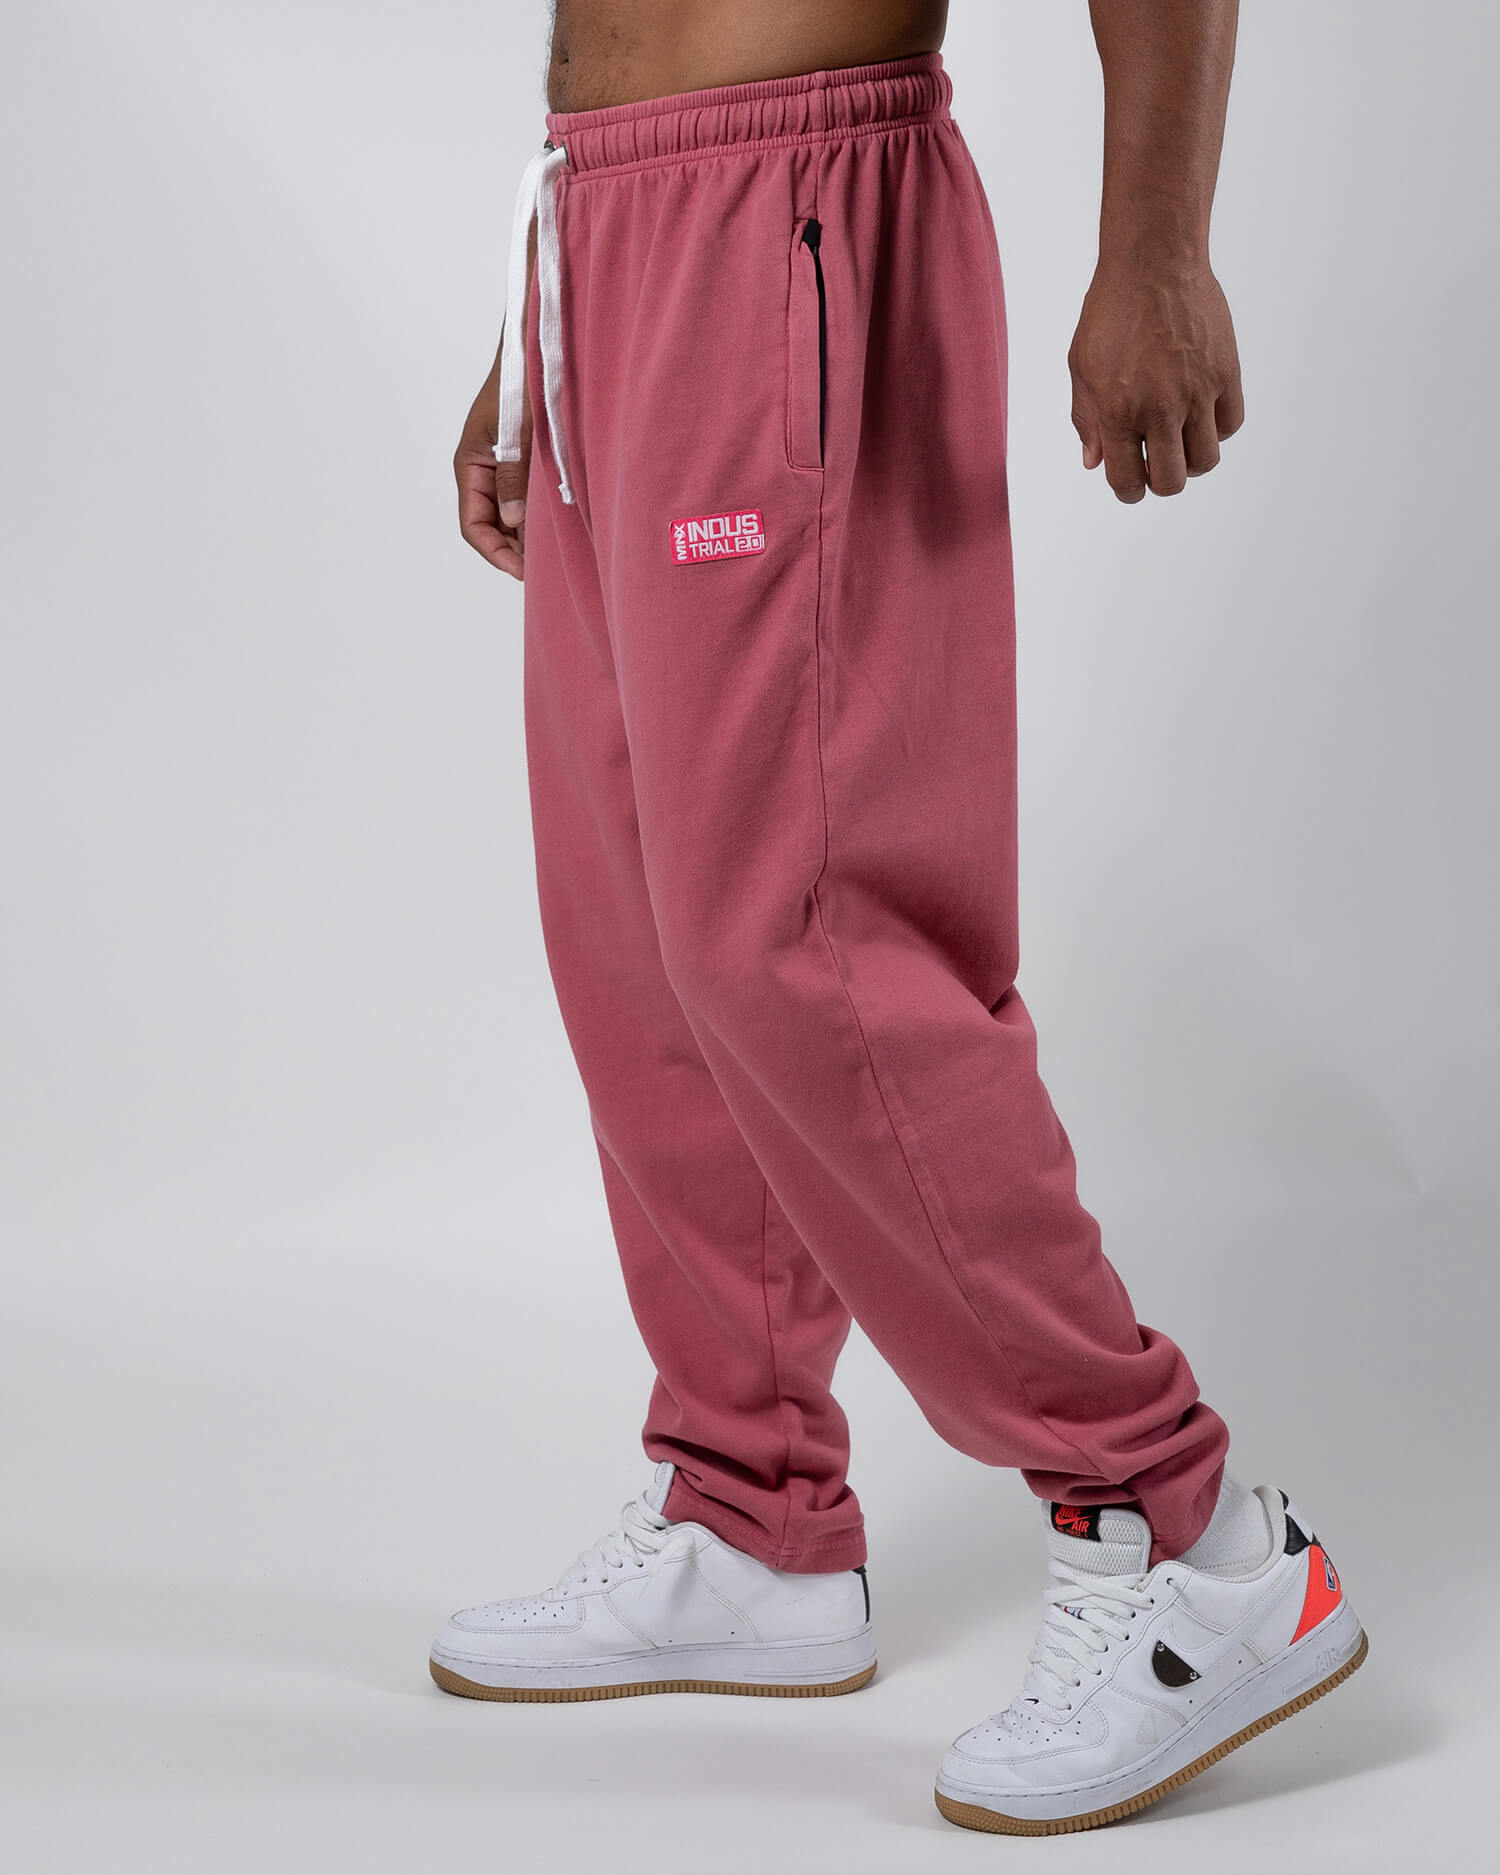 MNX Pantalones Industrial, rosa polvorienta - MNX Sportswear